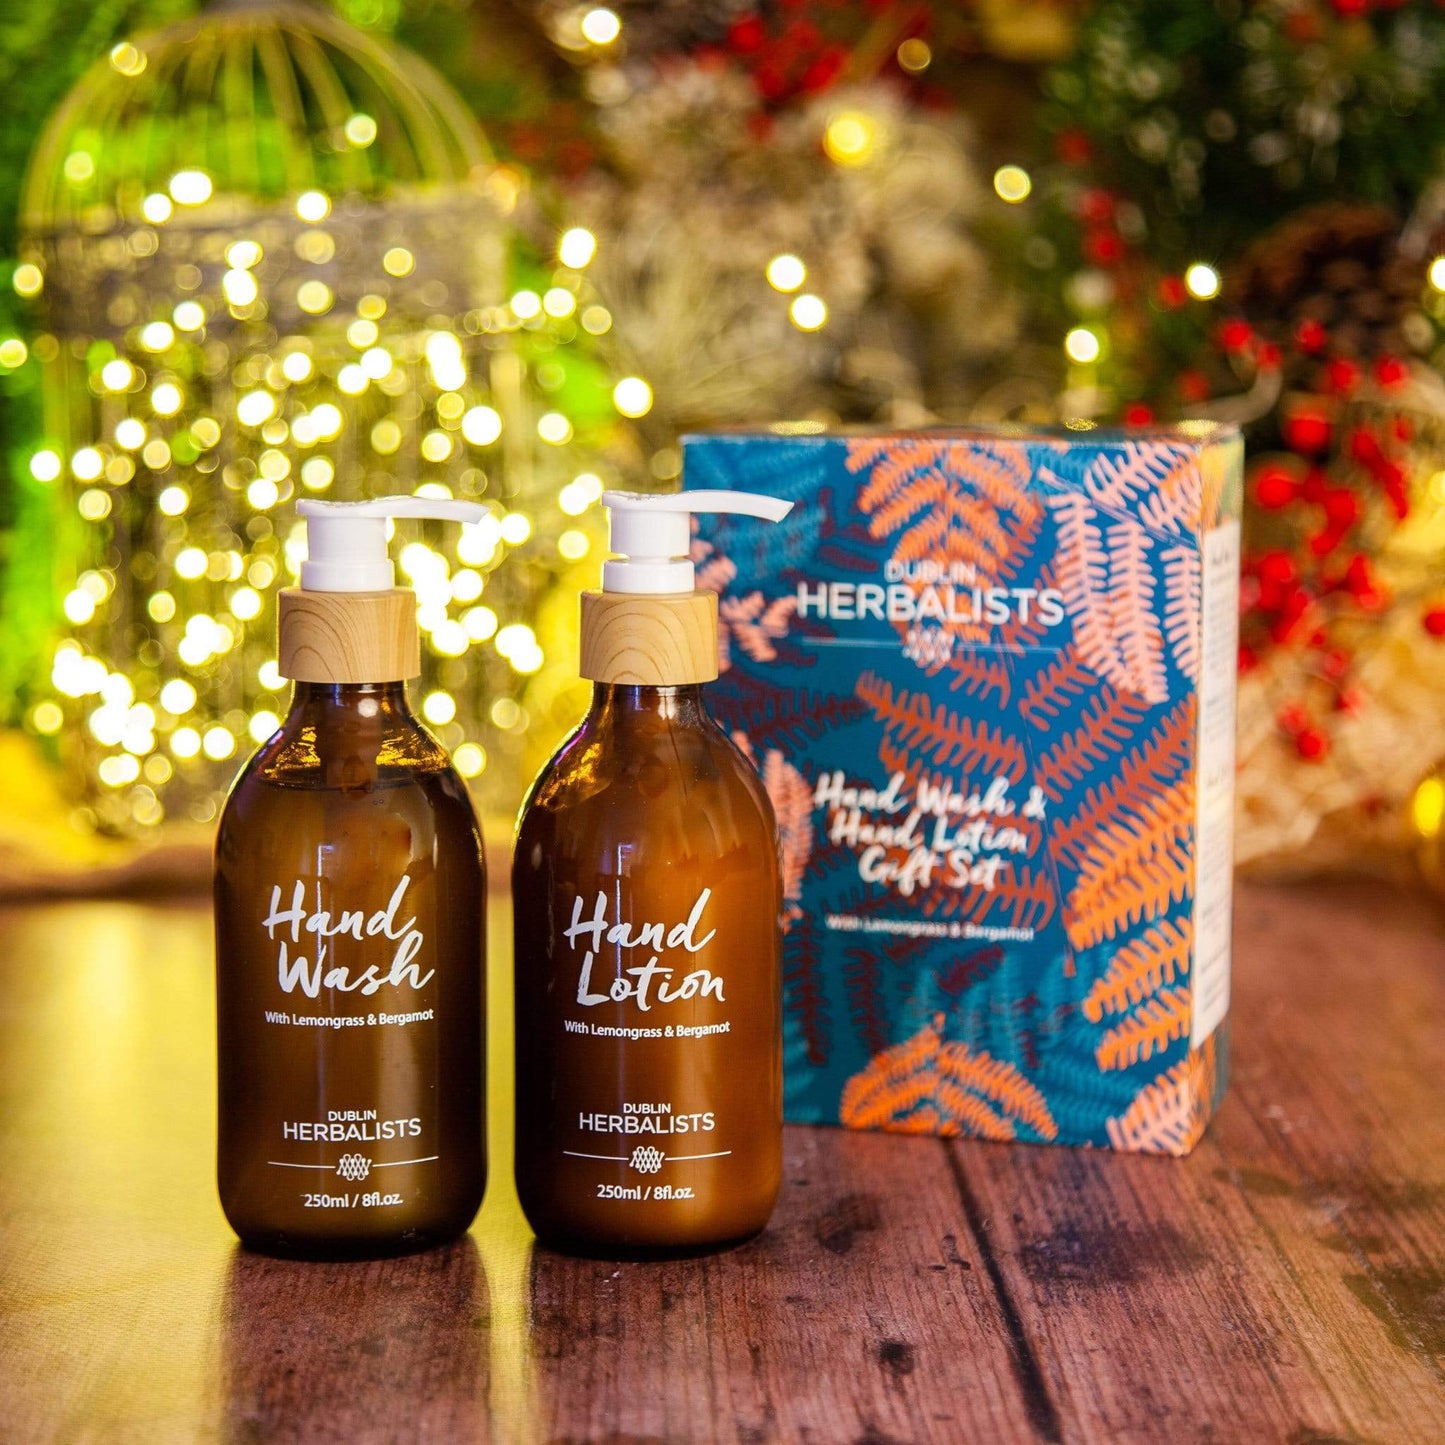 Dublin Herbalists Gift Box Hand Wash & Hand Lotion Gift Set with Lemongrass & Bergamot - Dublin Herbalists